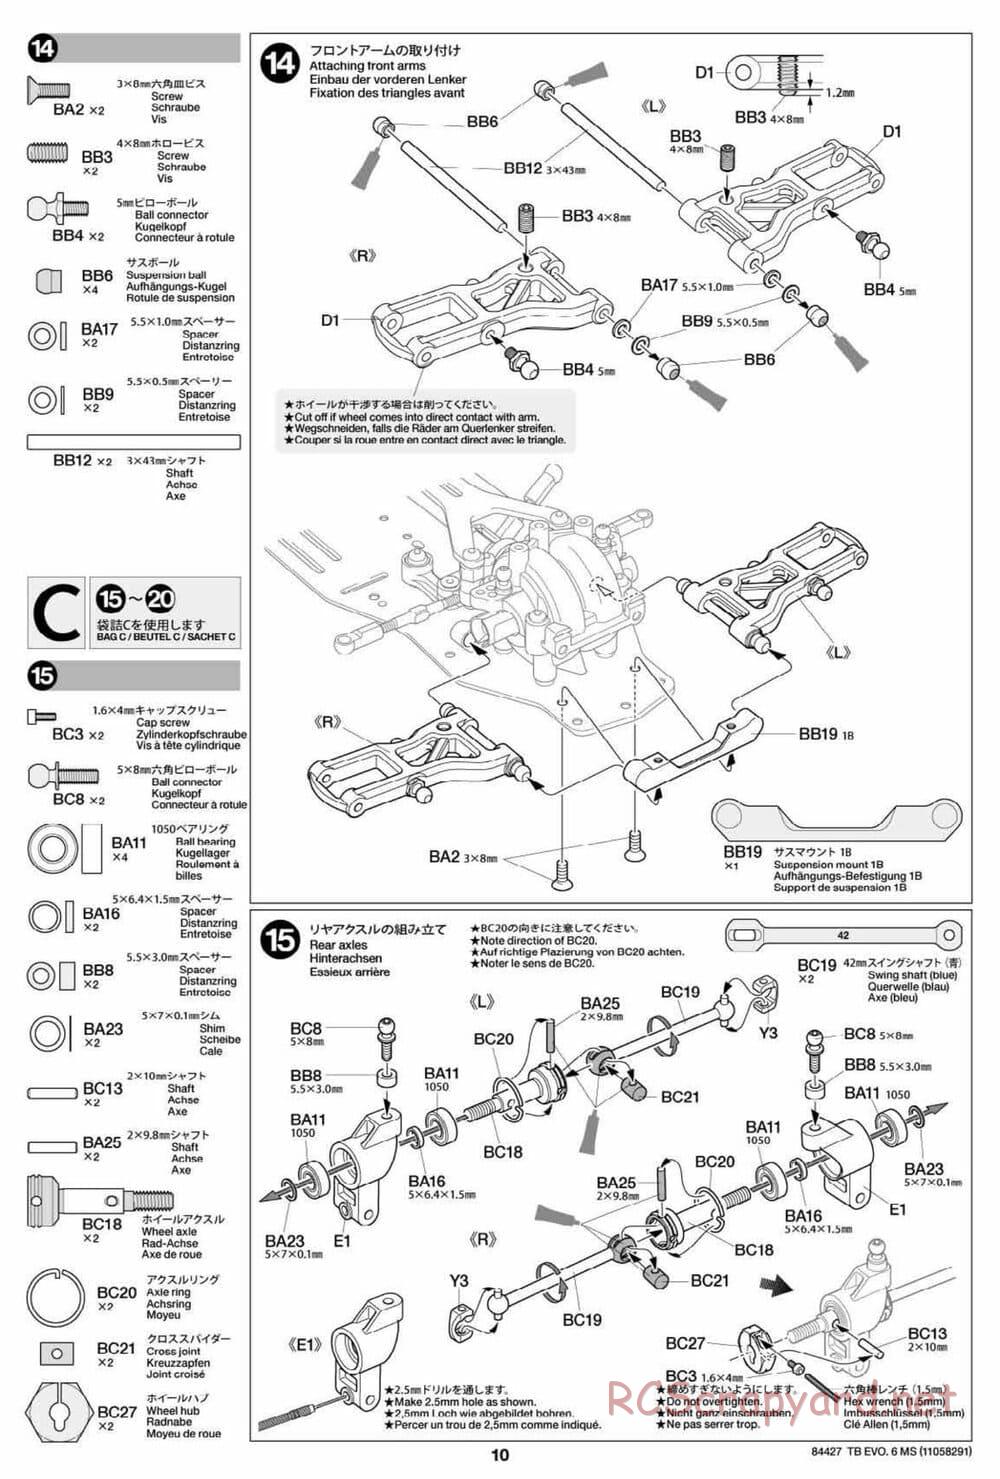 Tamiya - TB Evo.6 MS Chassis - Manual - Page 10